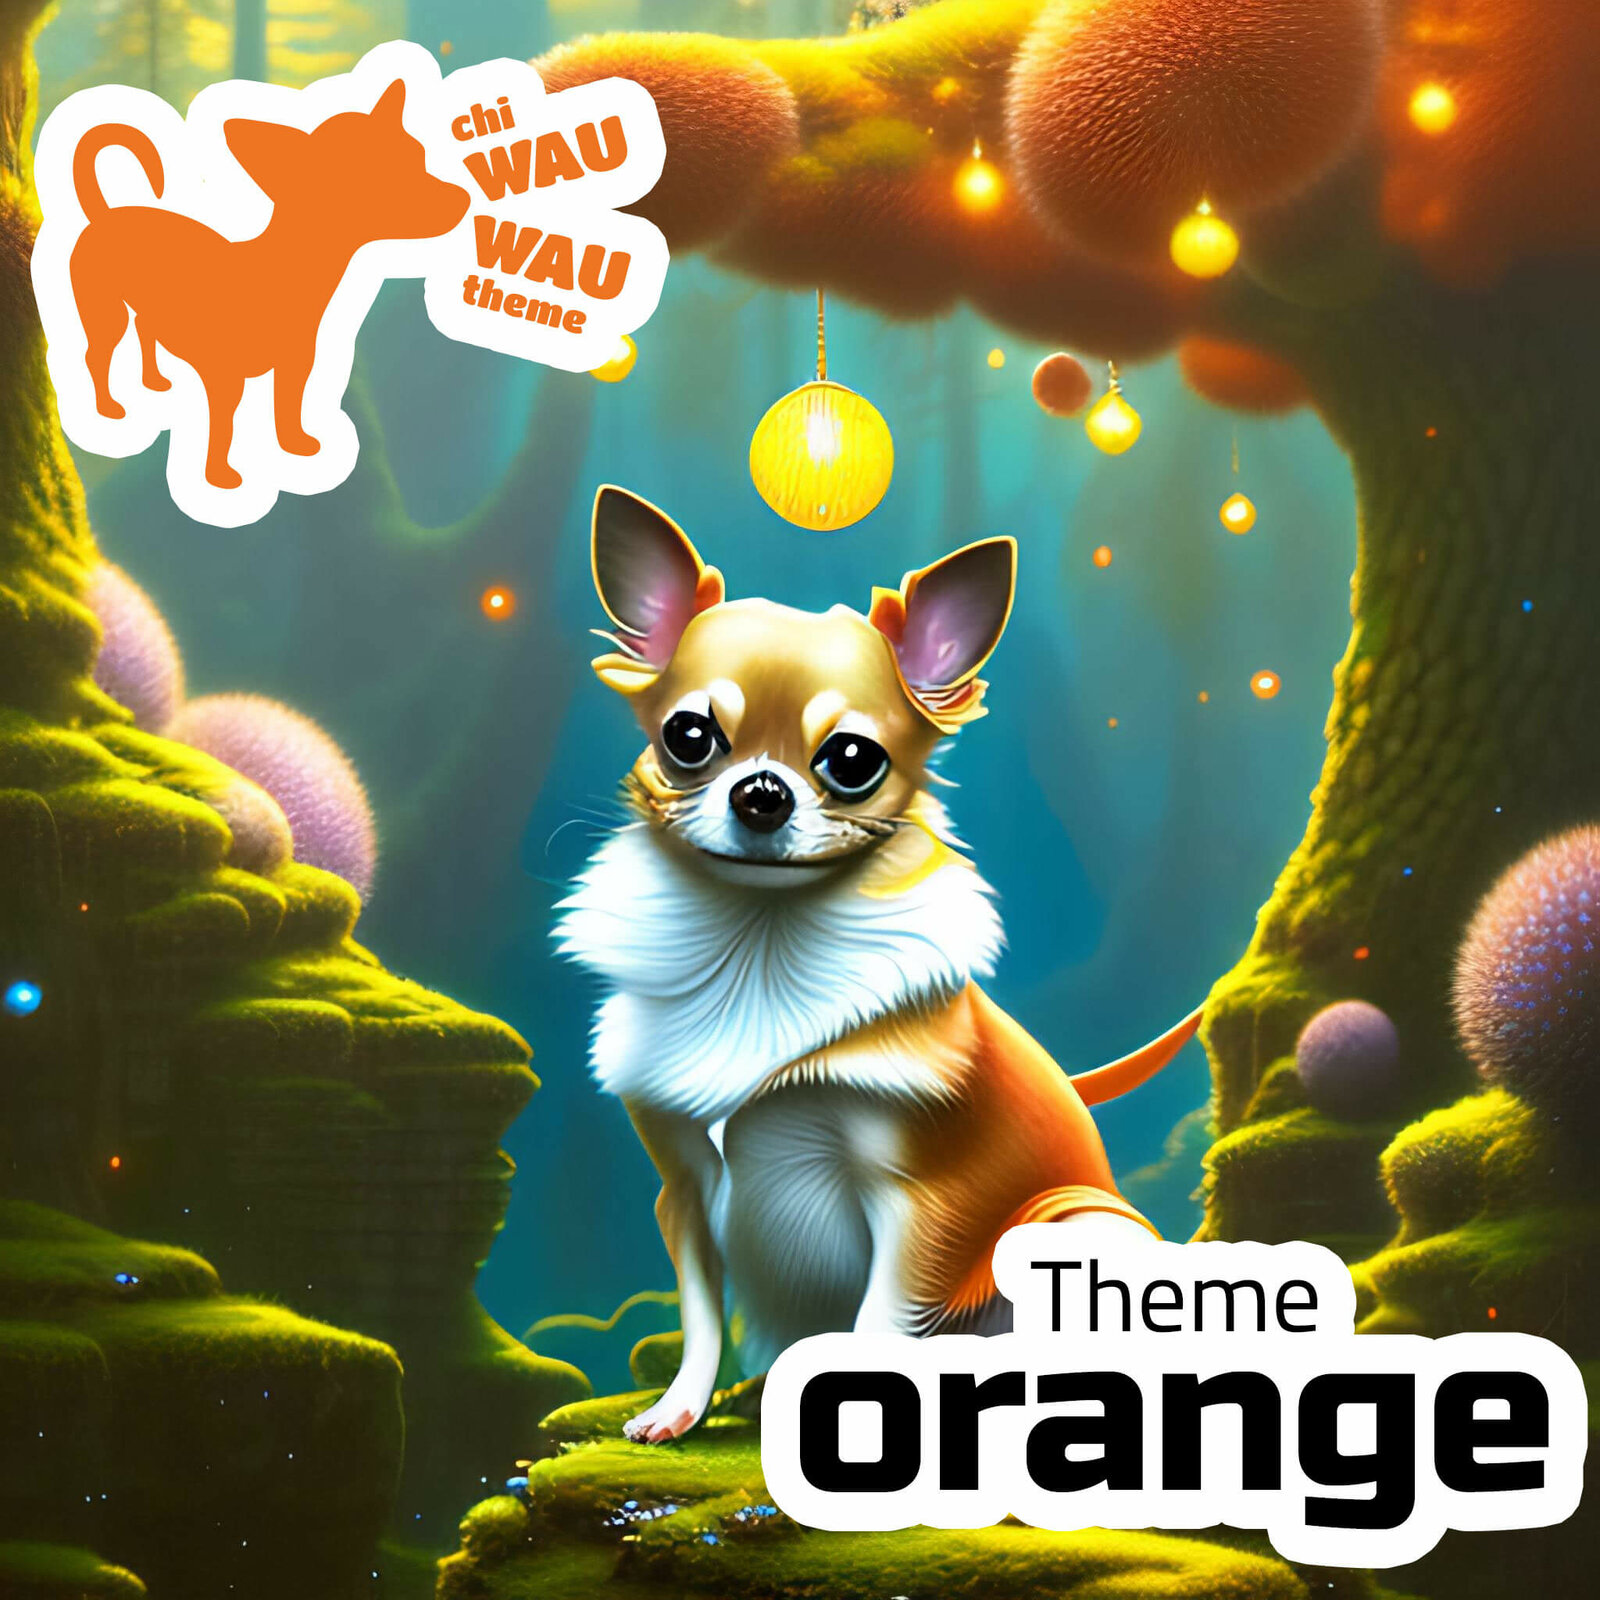 Theme orange